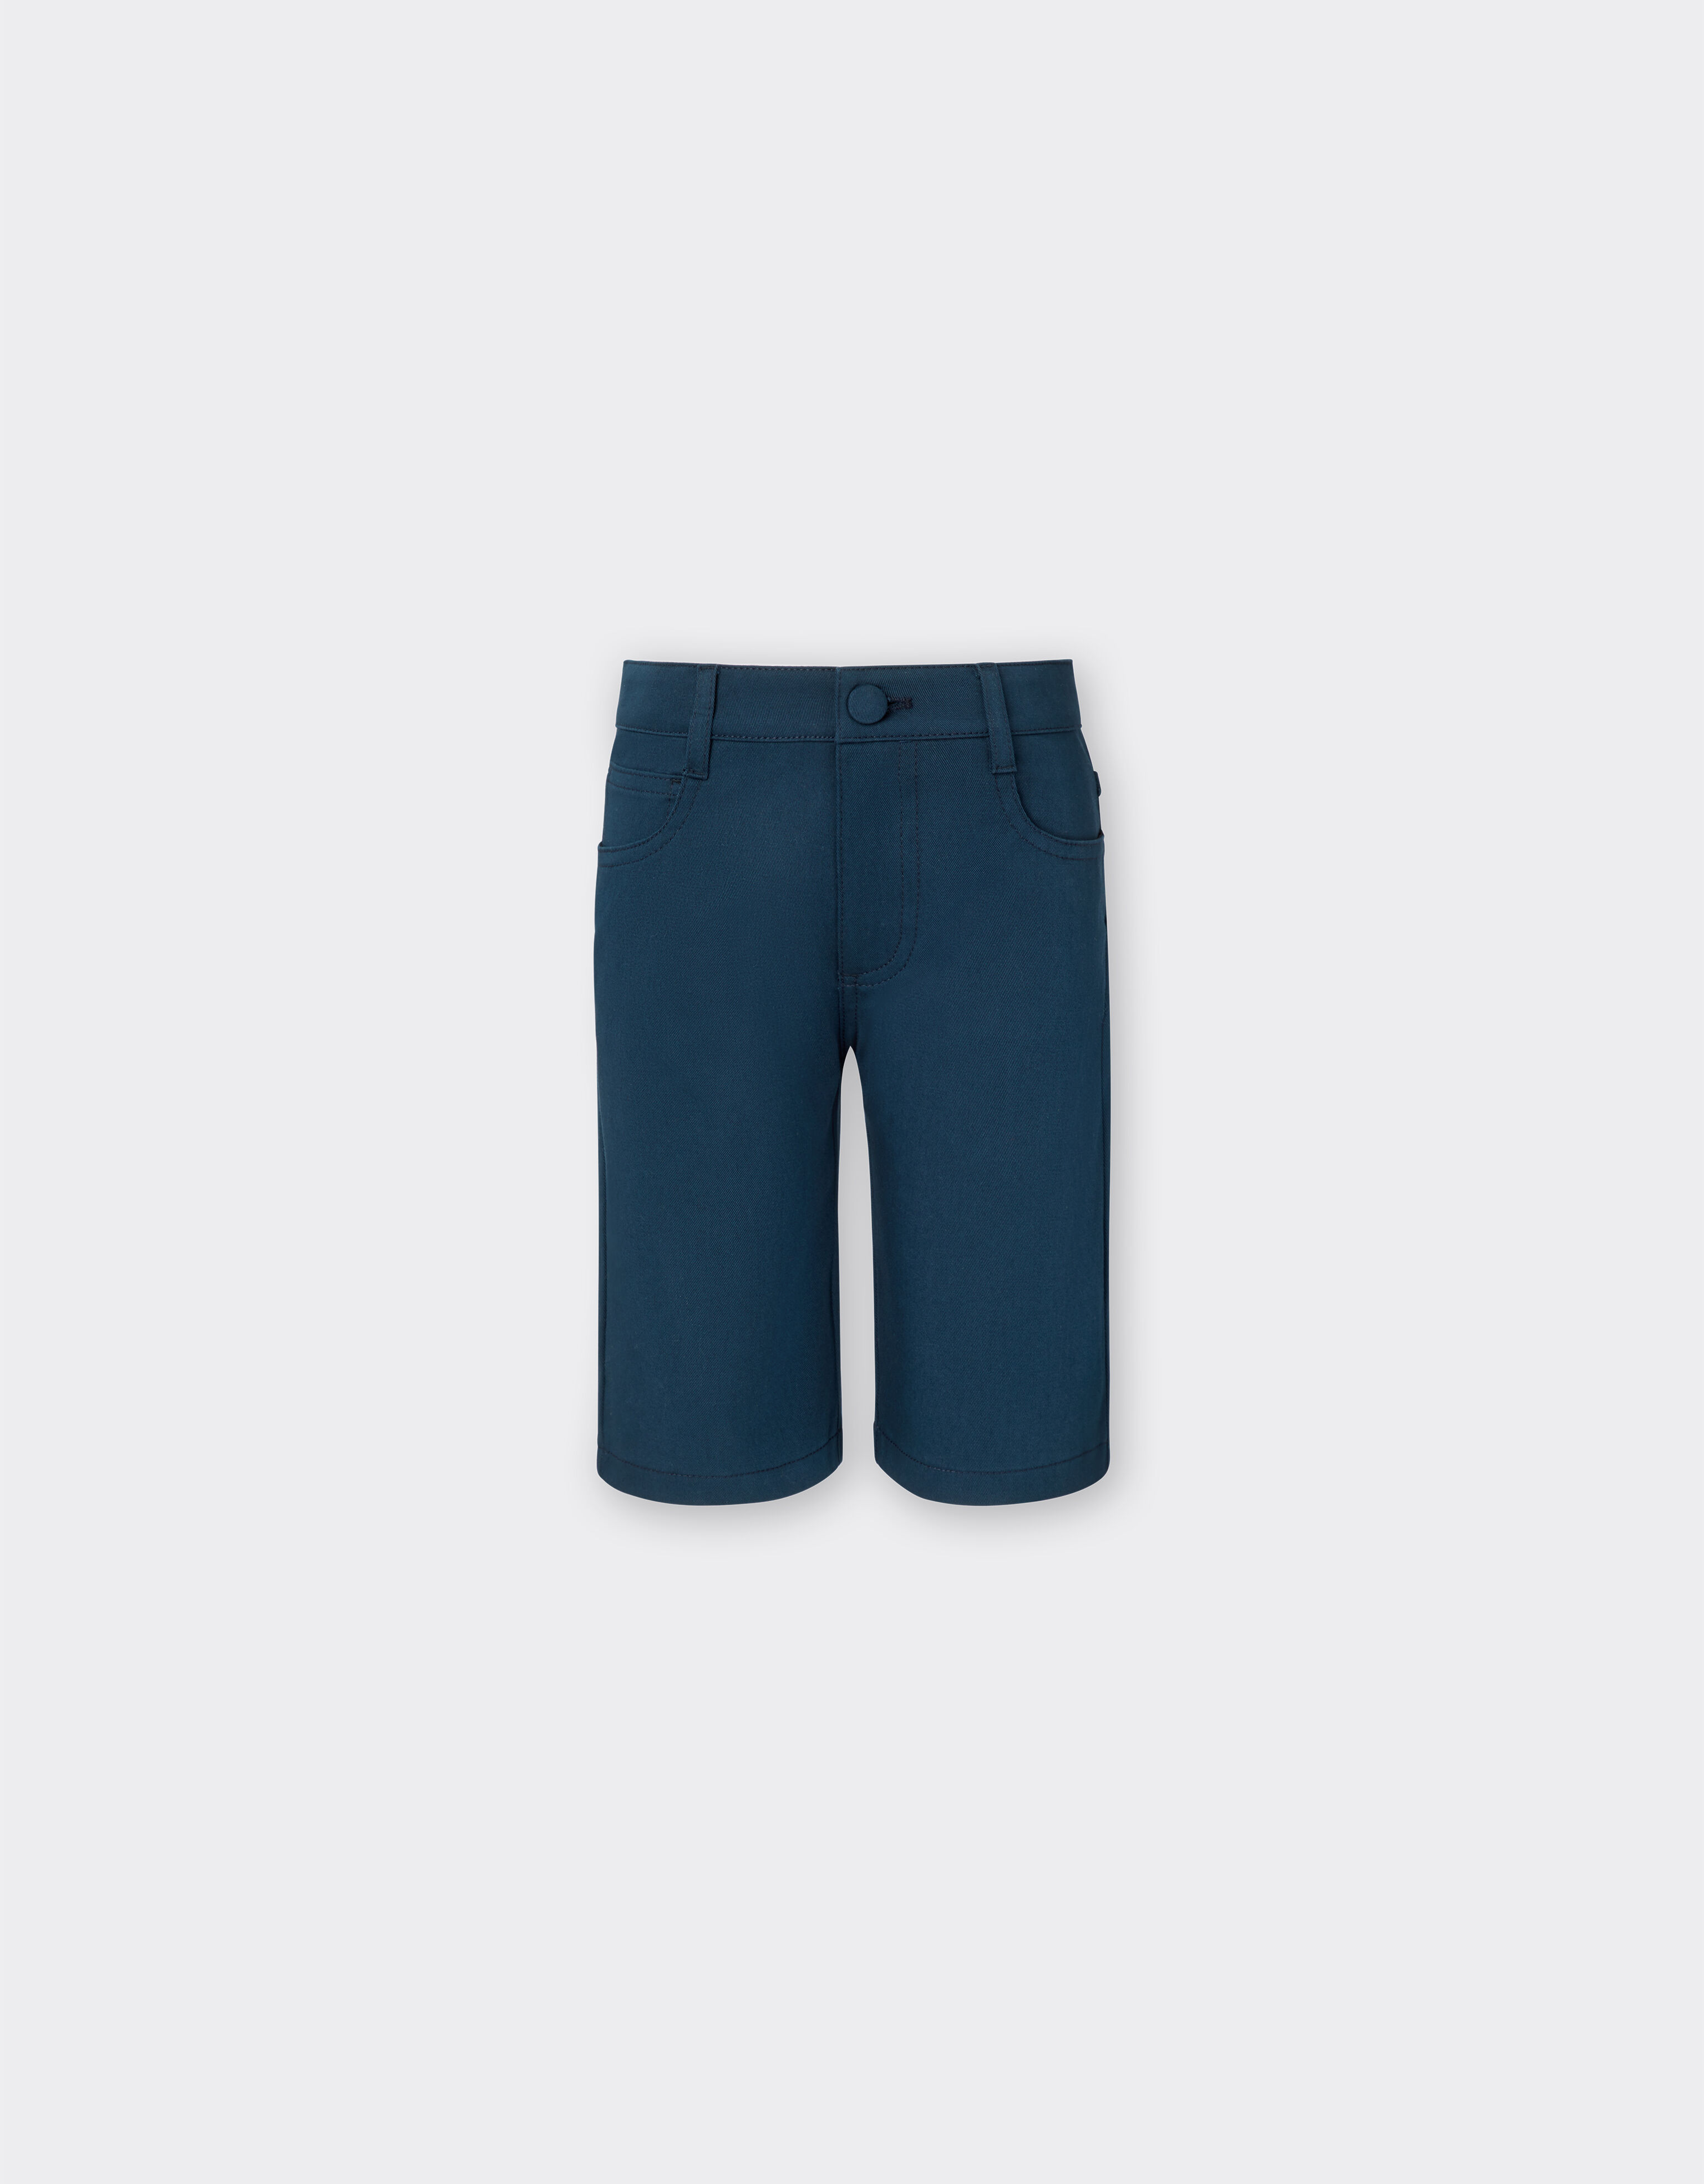 Ferrari Children’s Bermuda shorts in organic cotton Navy 20165fK